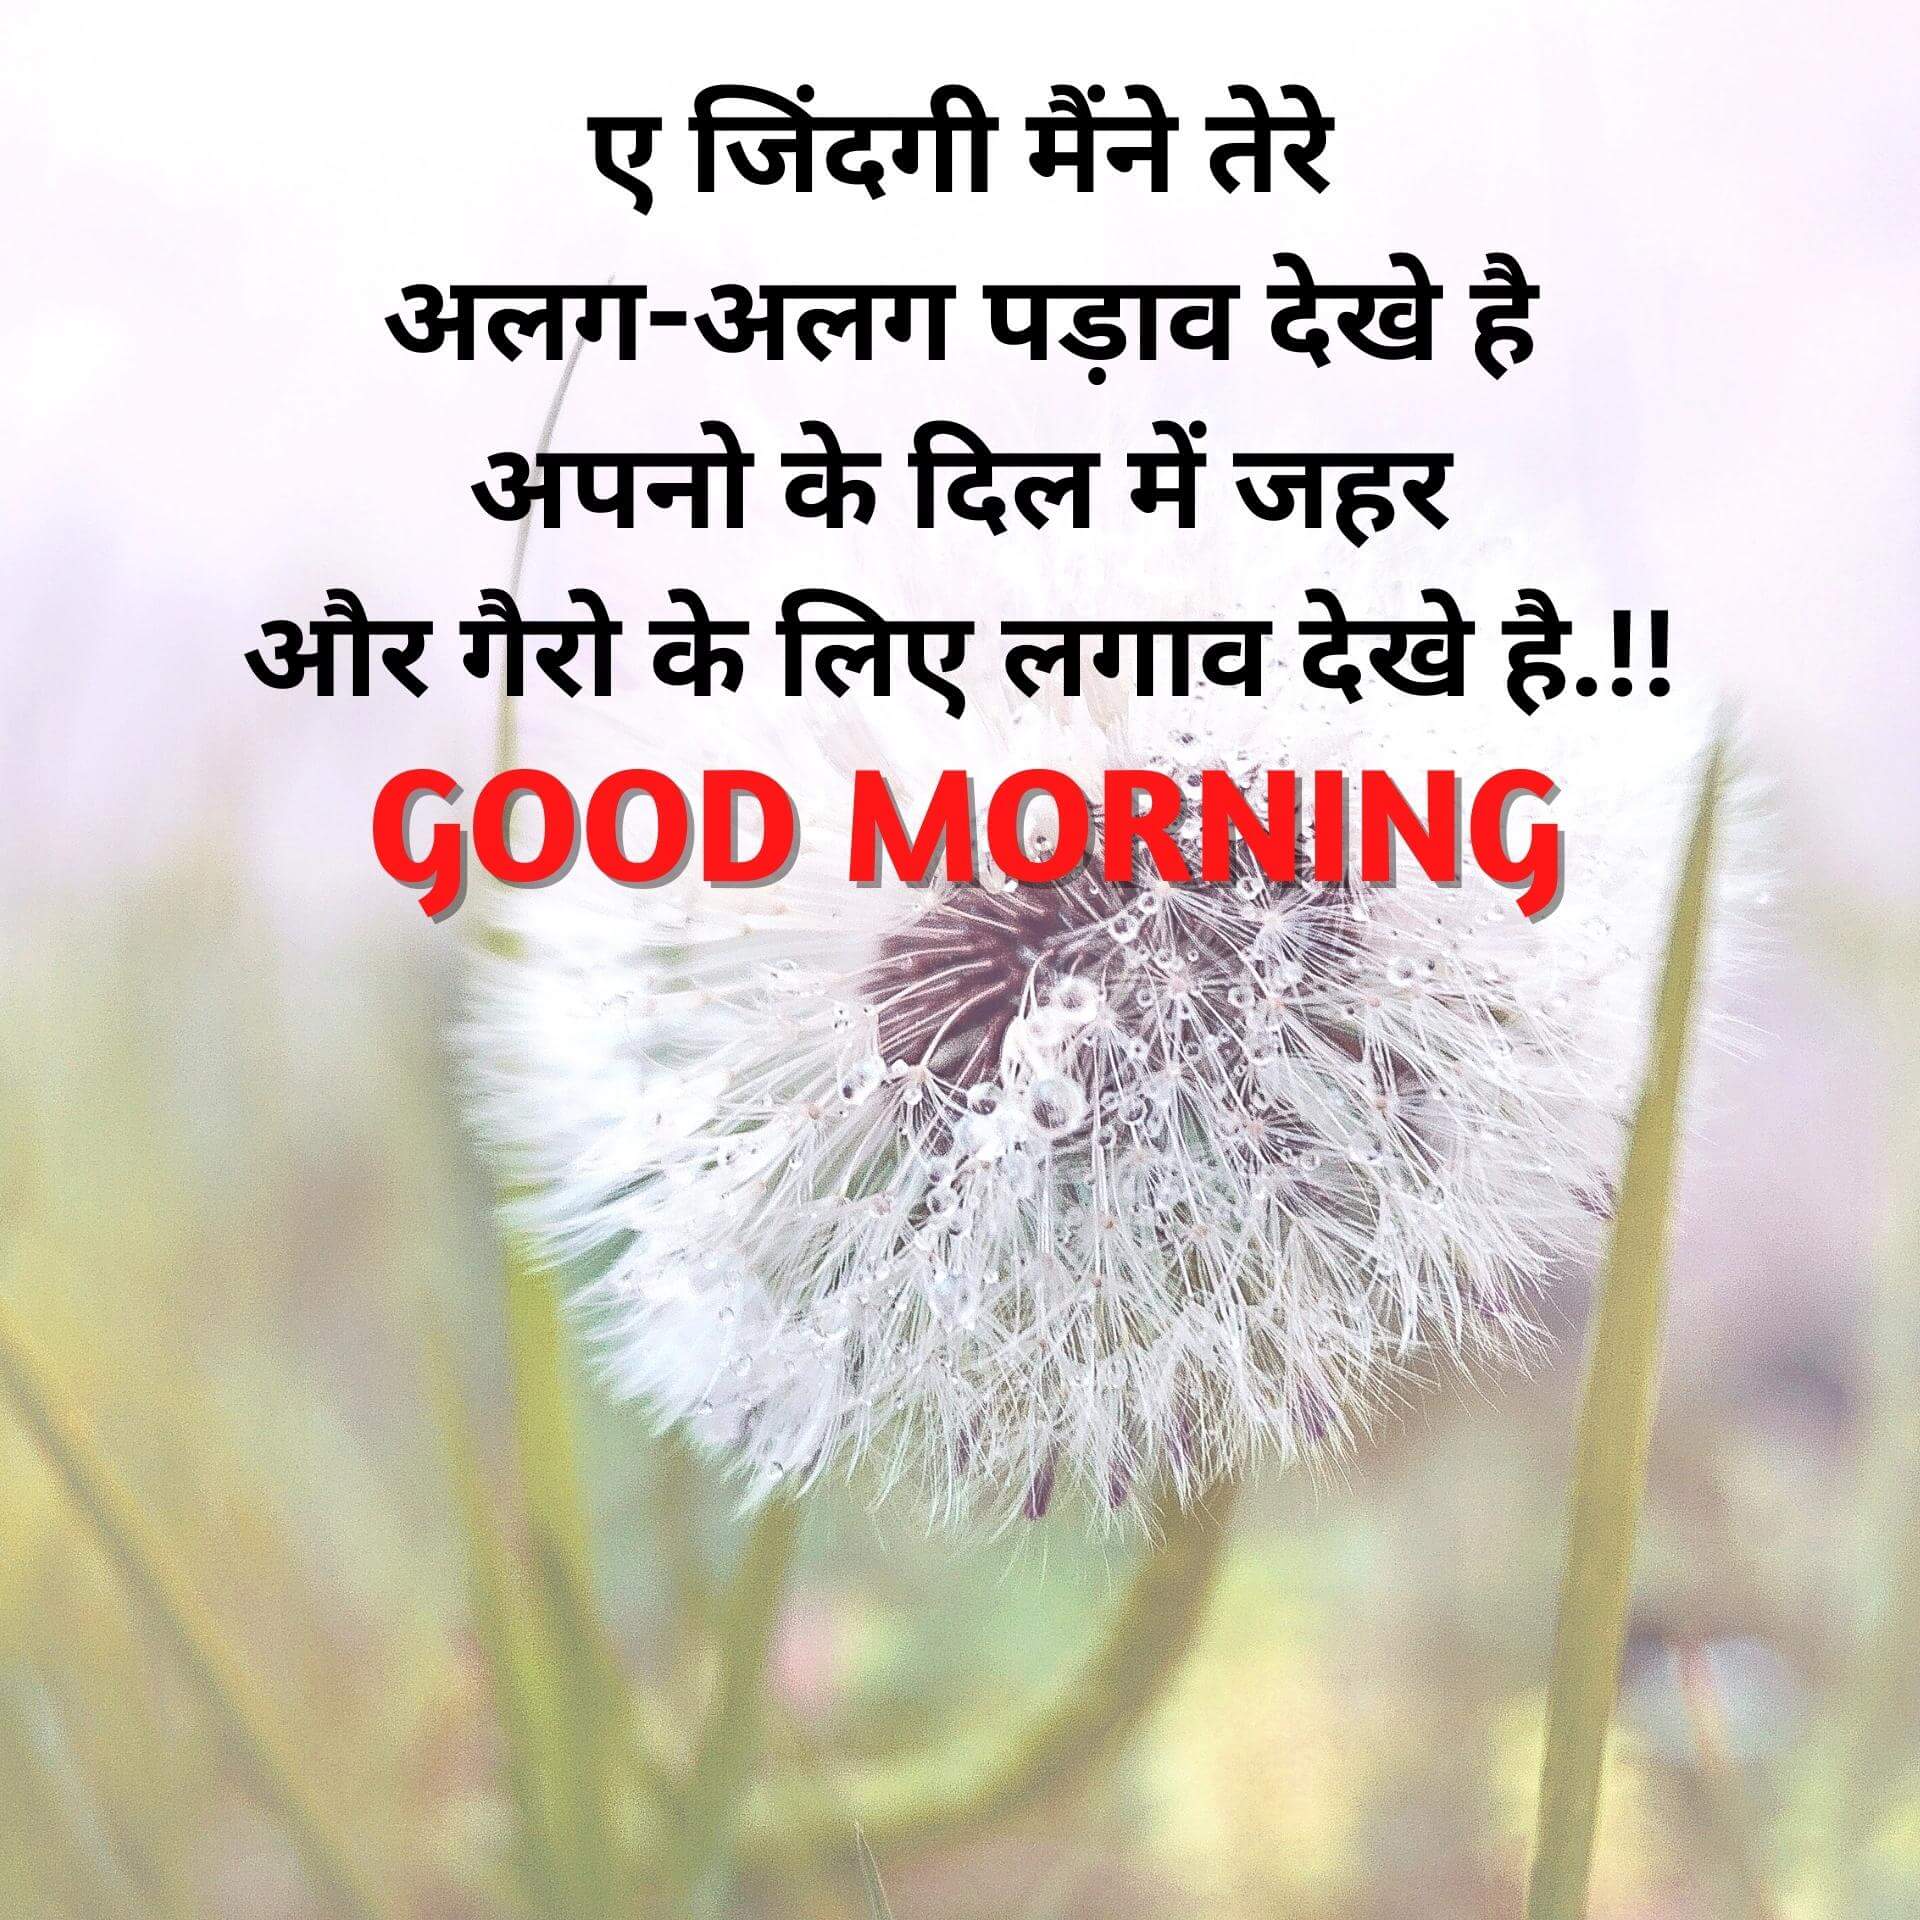 Hindi Quotes Good Morning Wishes